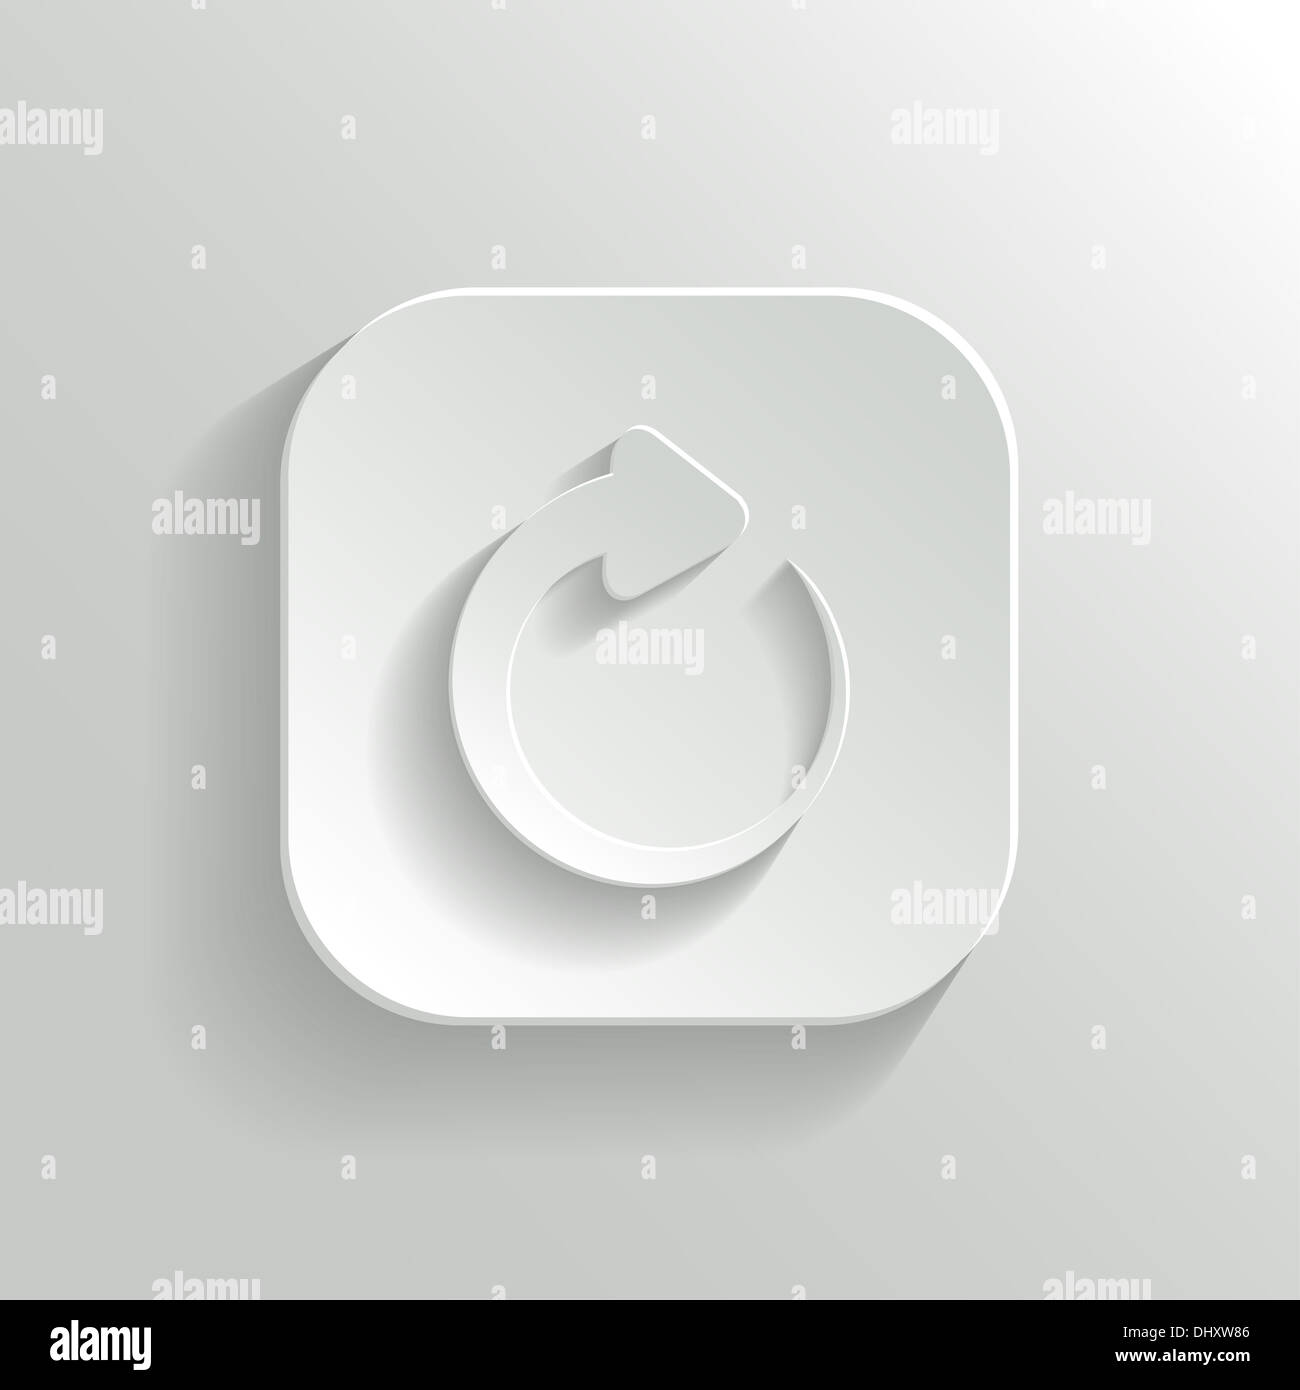 Media player icon - white app button with shadow Stock Photo